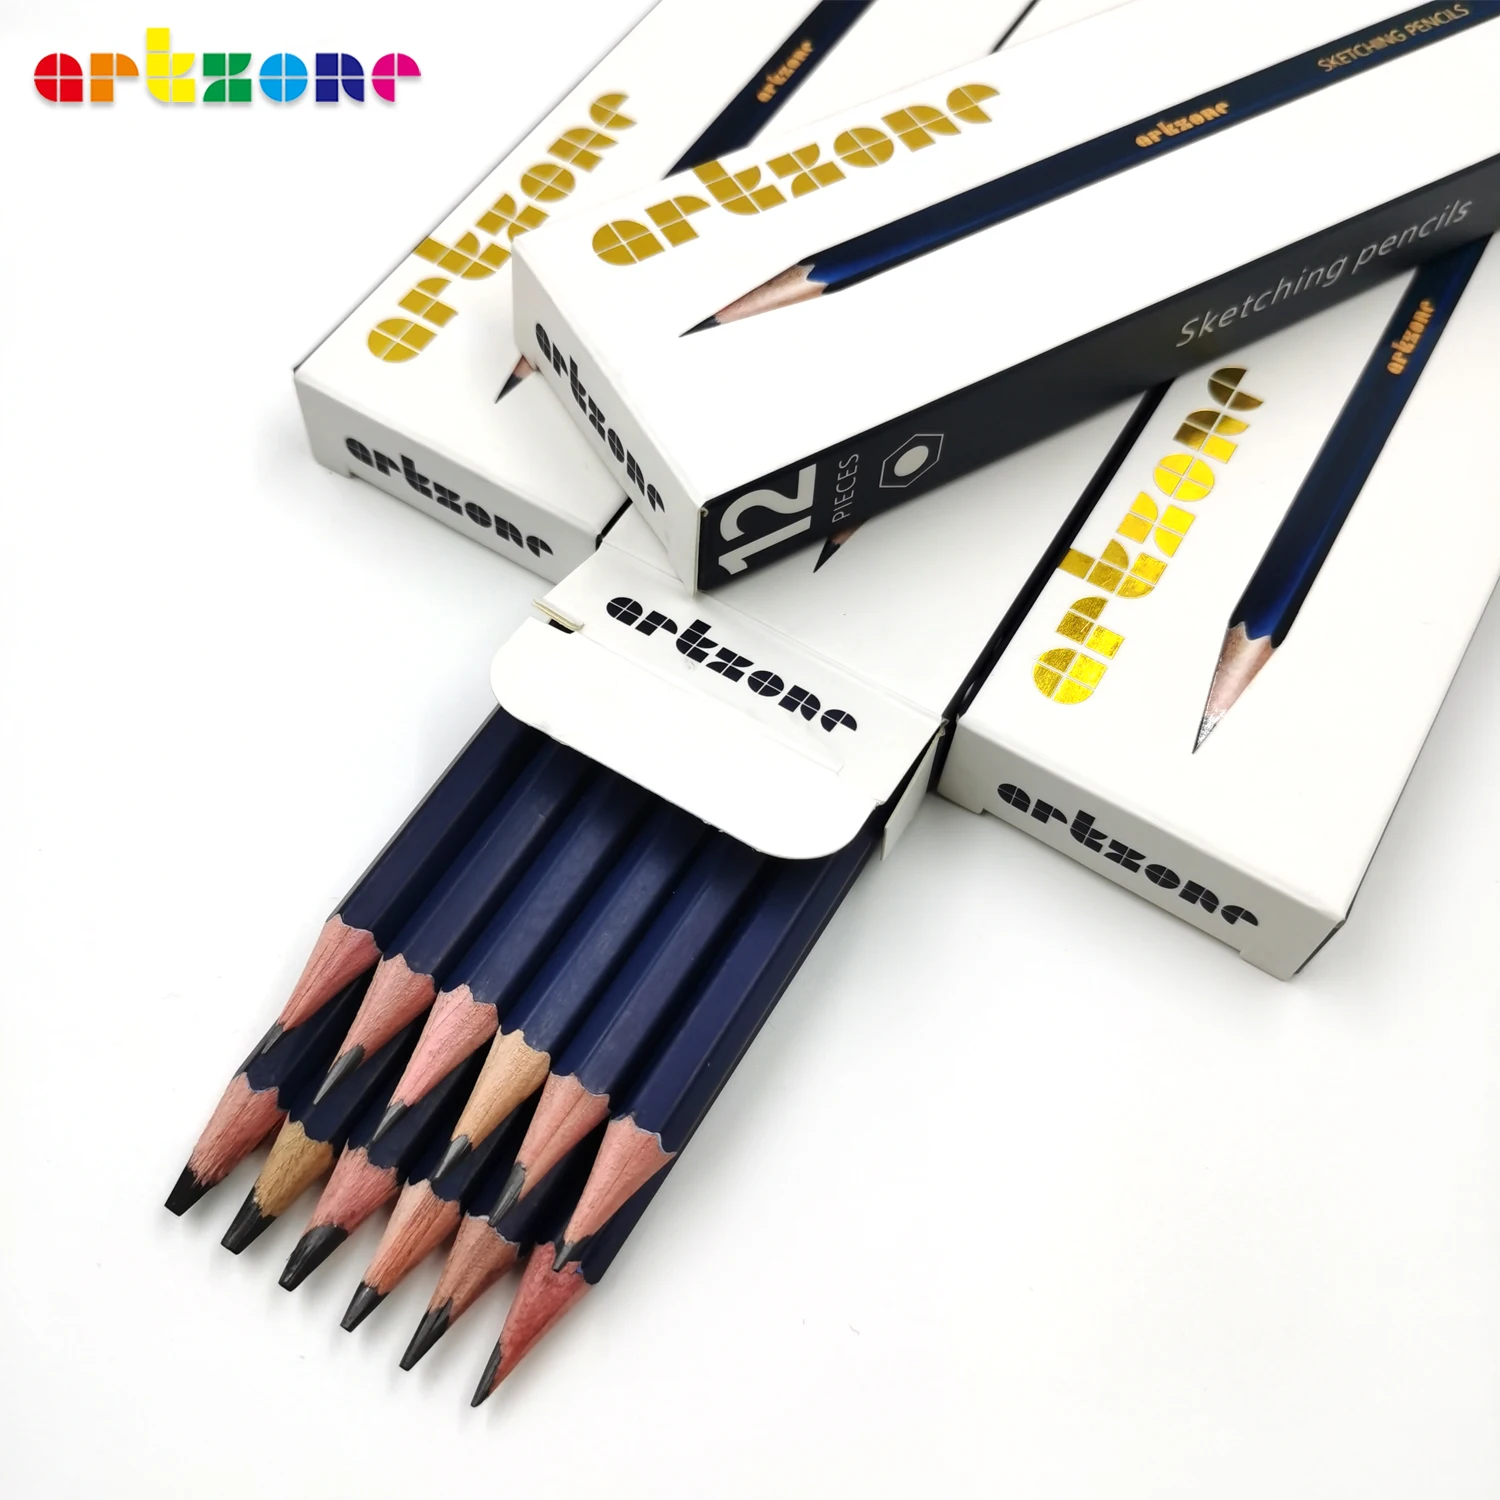 Professional Drawing Sketching Art Pencils Set - 12 Graphite Drawing Pencils for Sketch Art and Shading 8B, 6B, 4B, 3B, 2B, B, HB, F, H, 2H, 4H, 6H